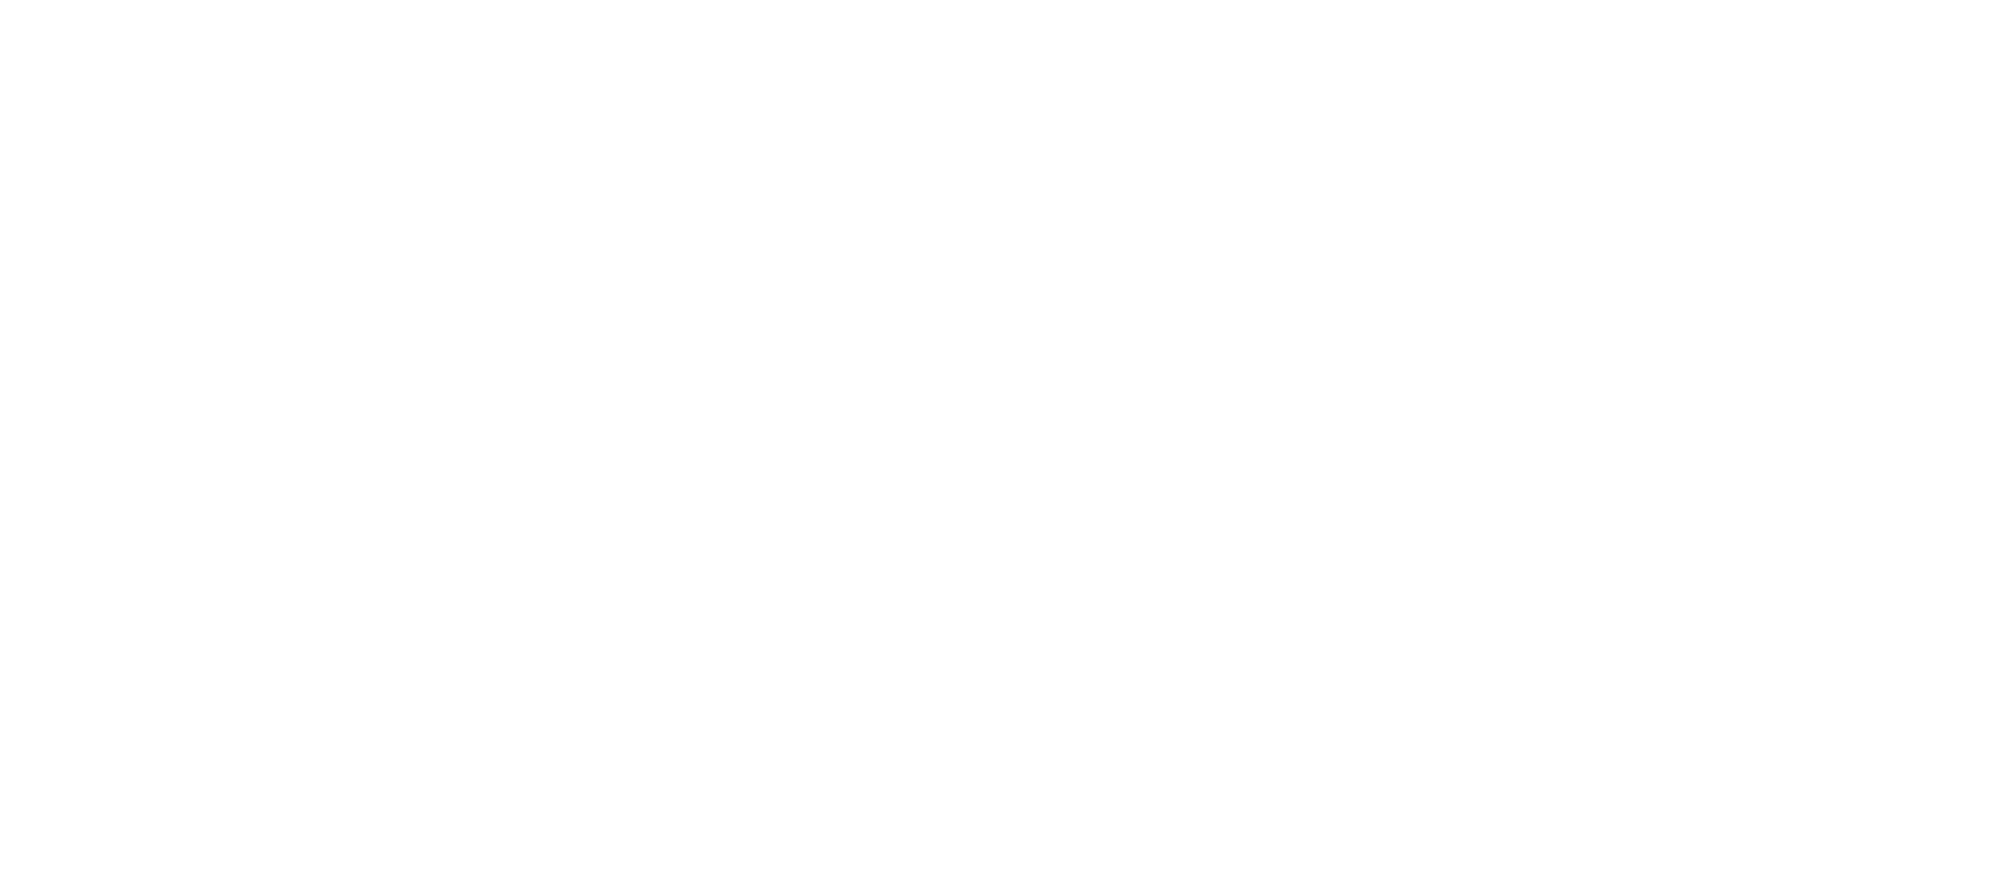 xolve branding creative logo